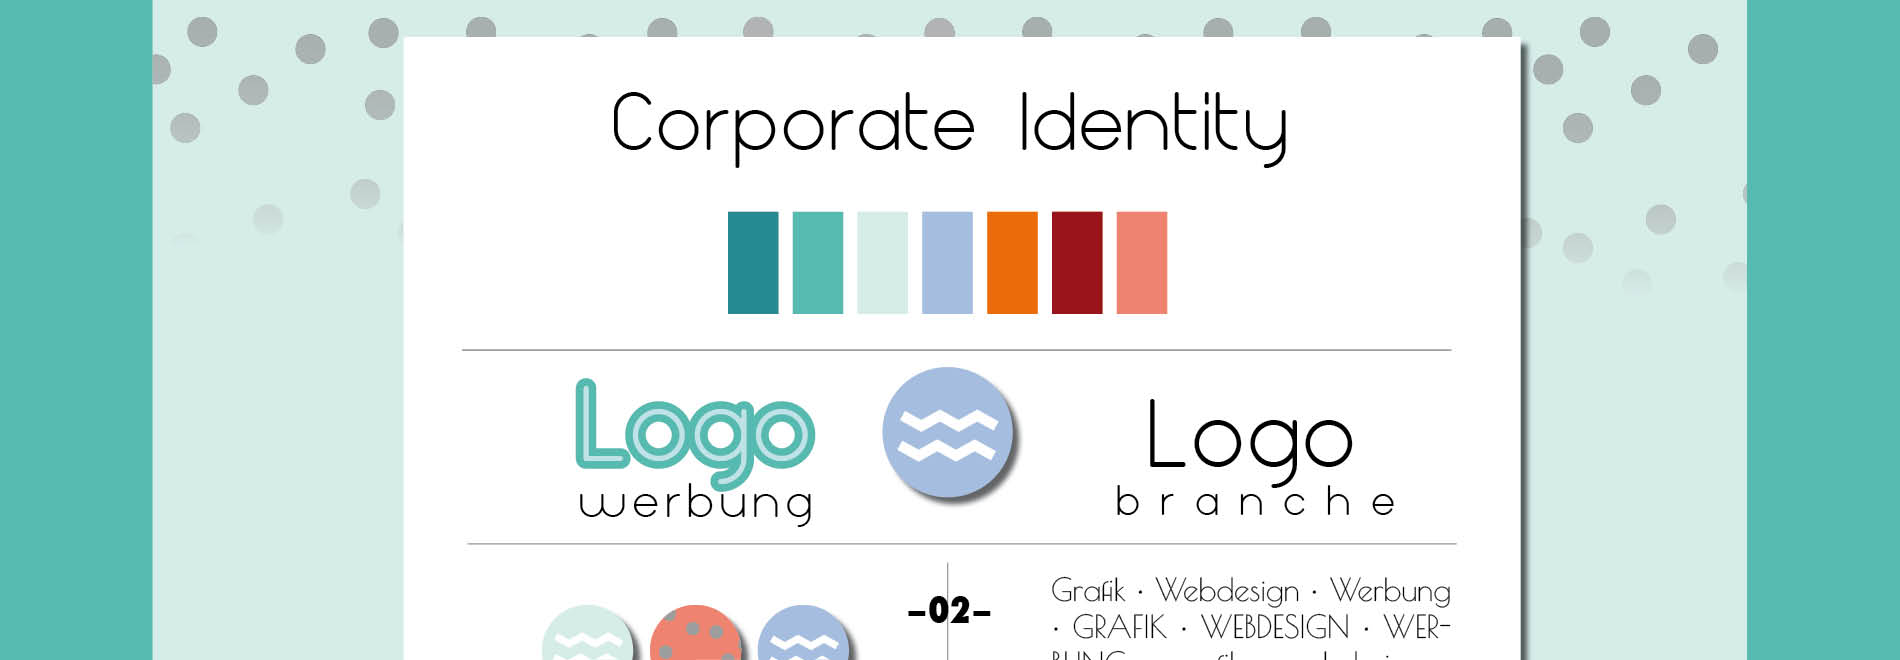 012_Corporate_Identity.jpg